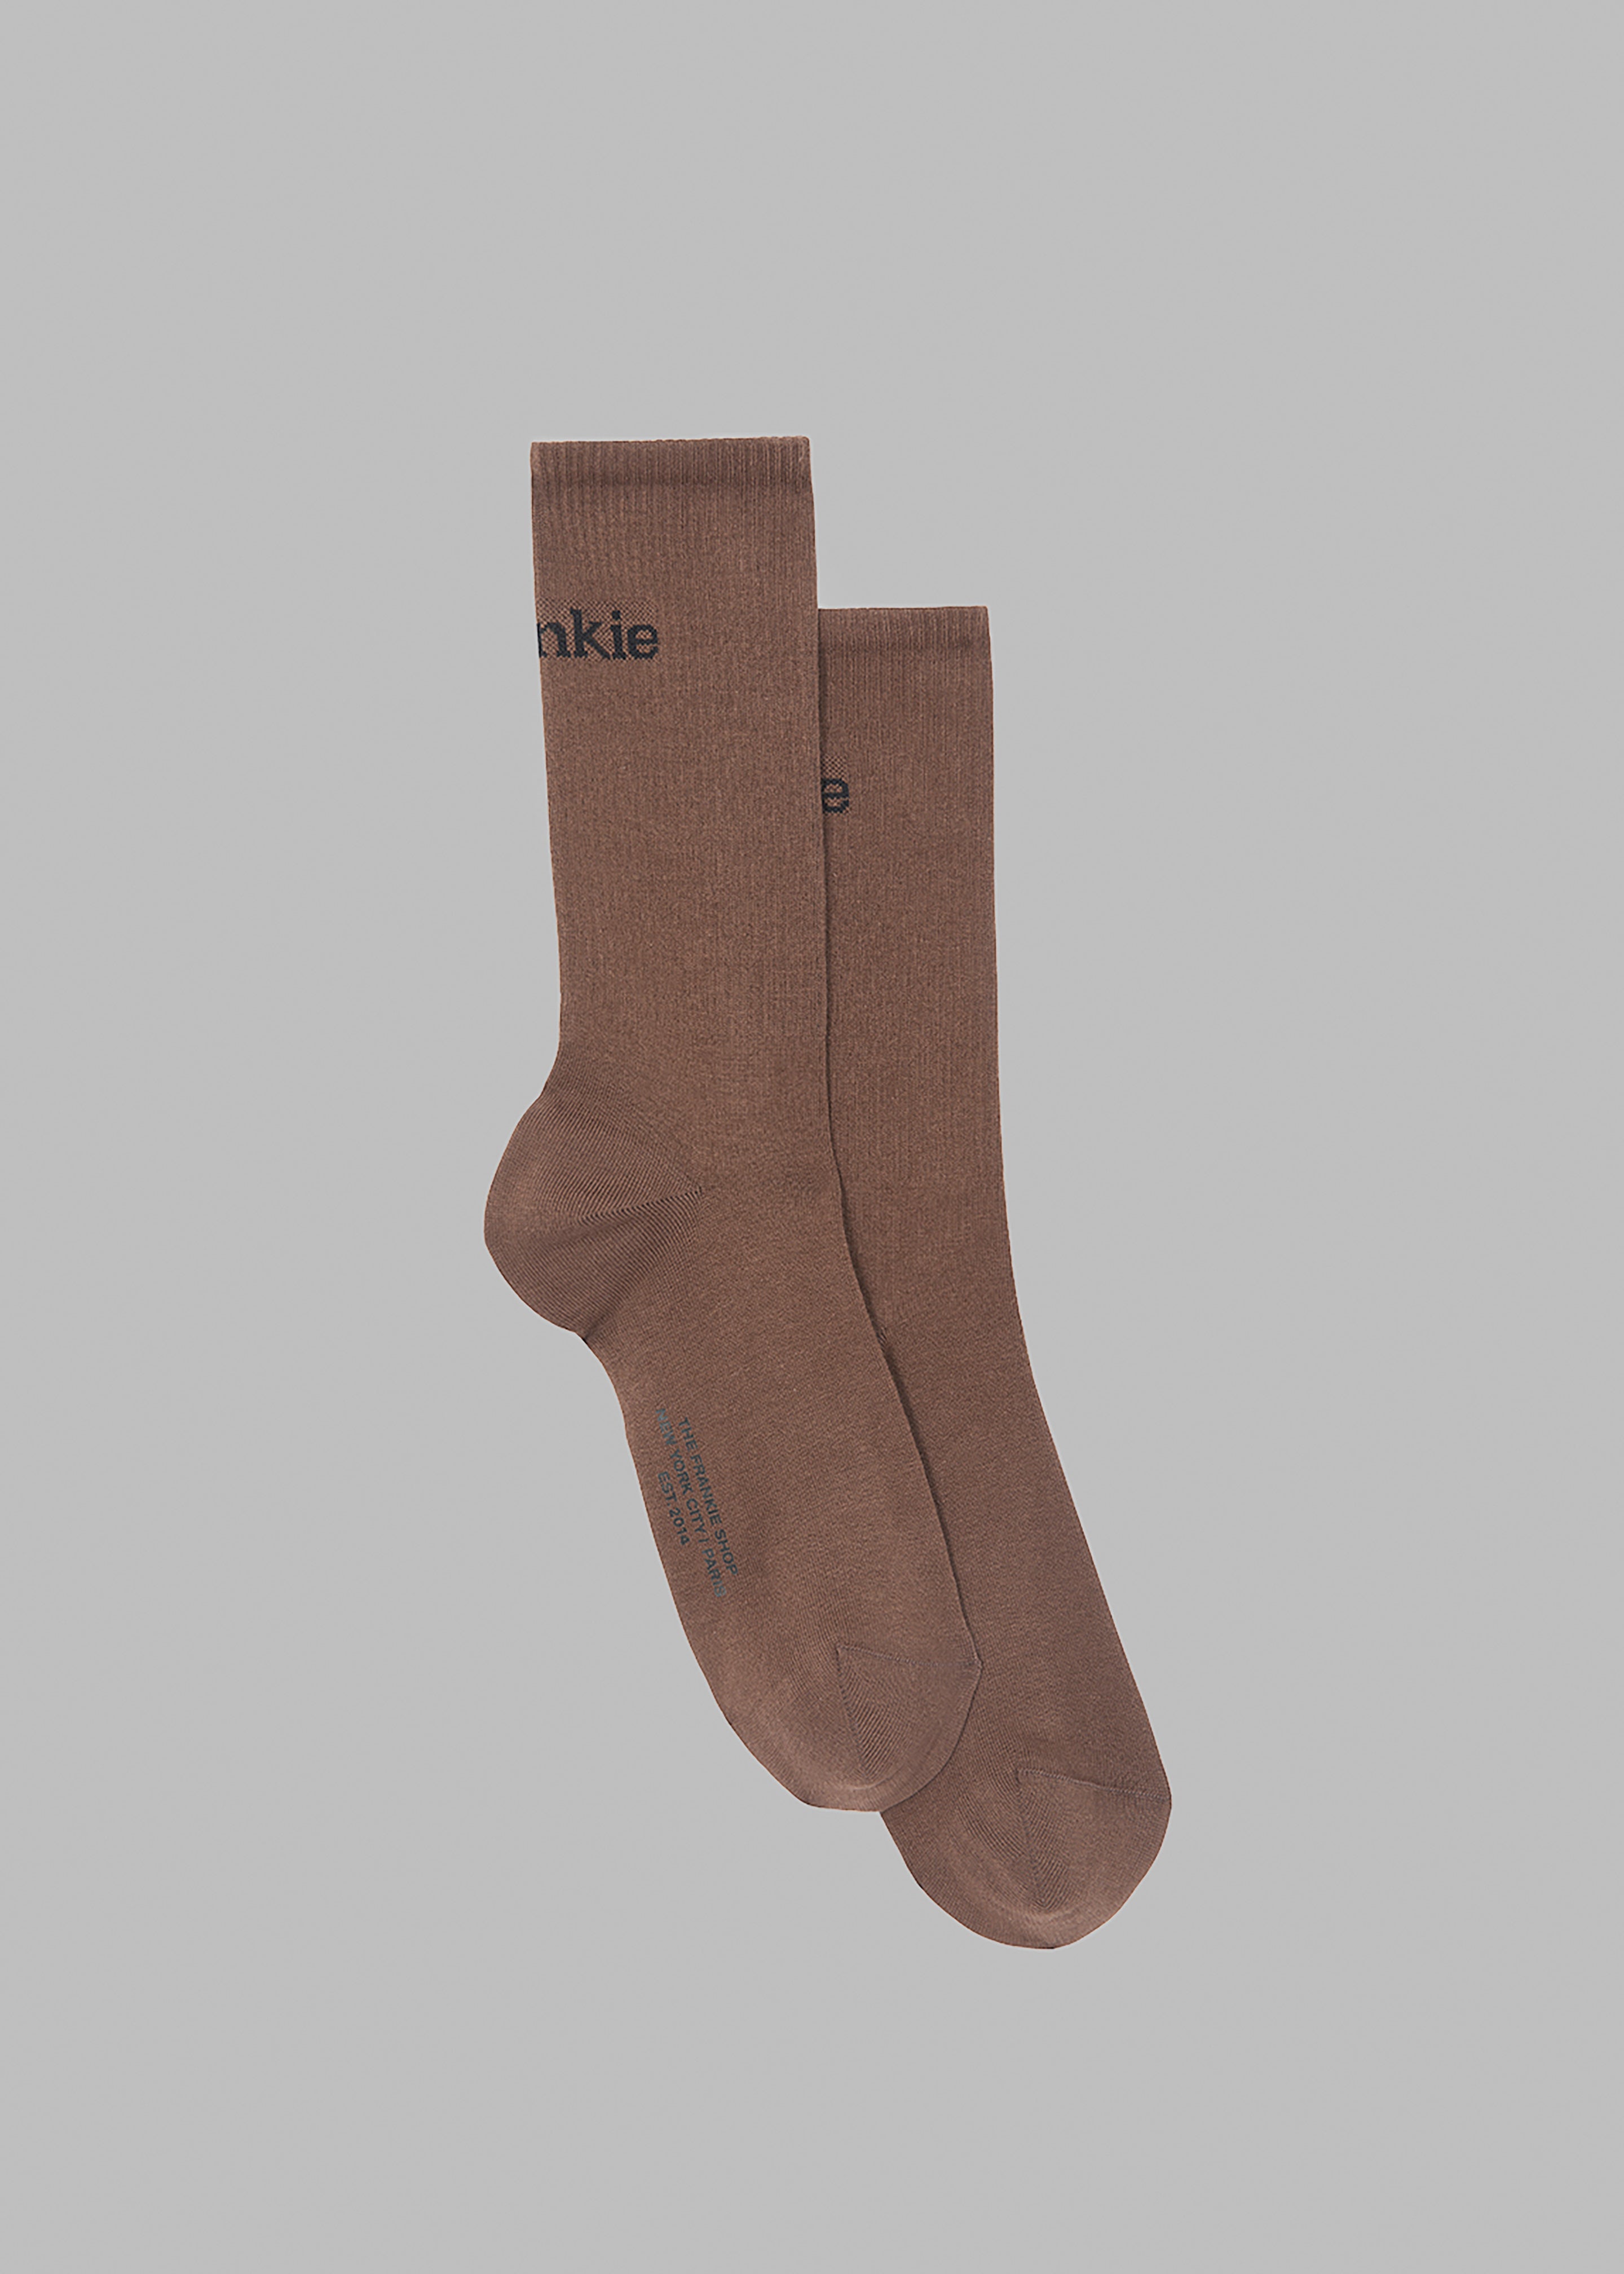 Frankie in English Ribbed Socks - Brown - 1